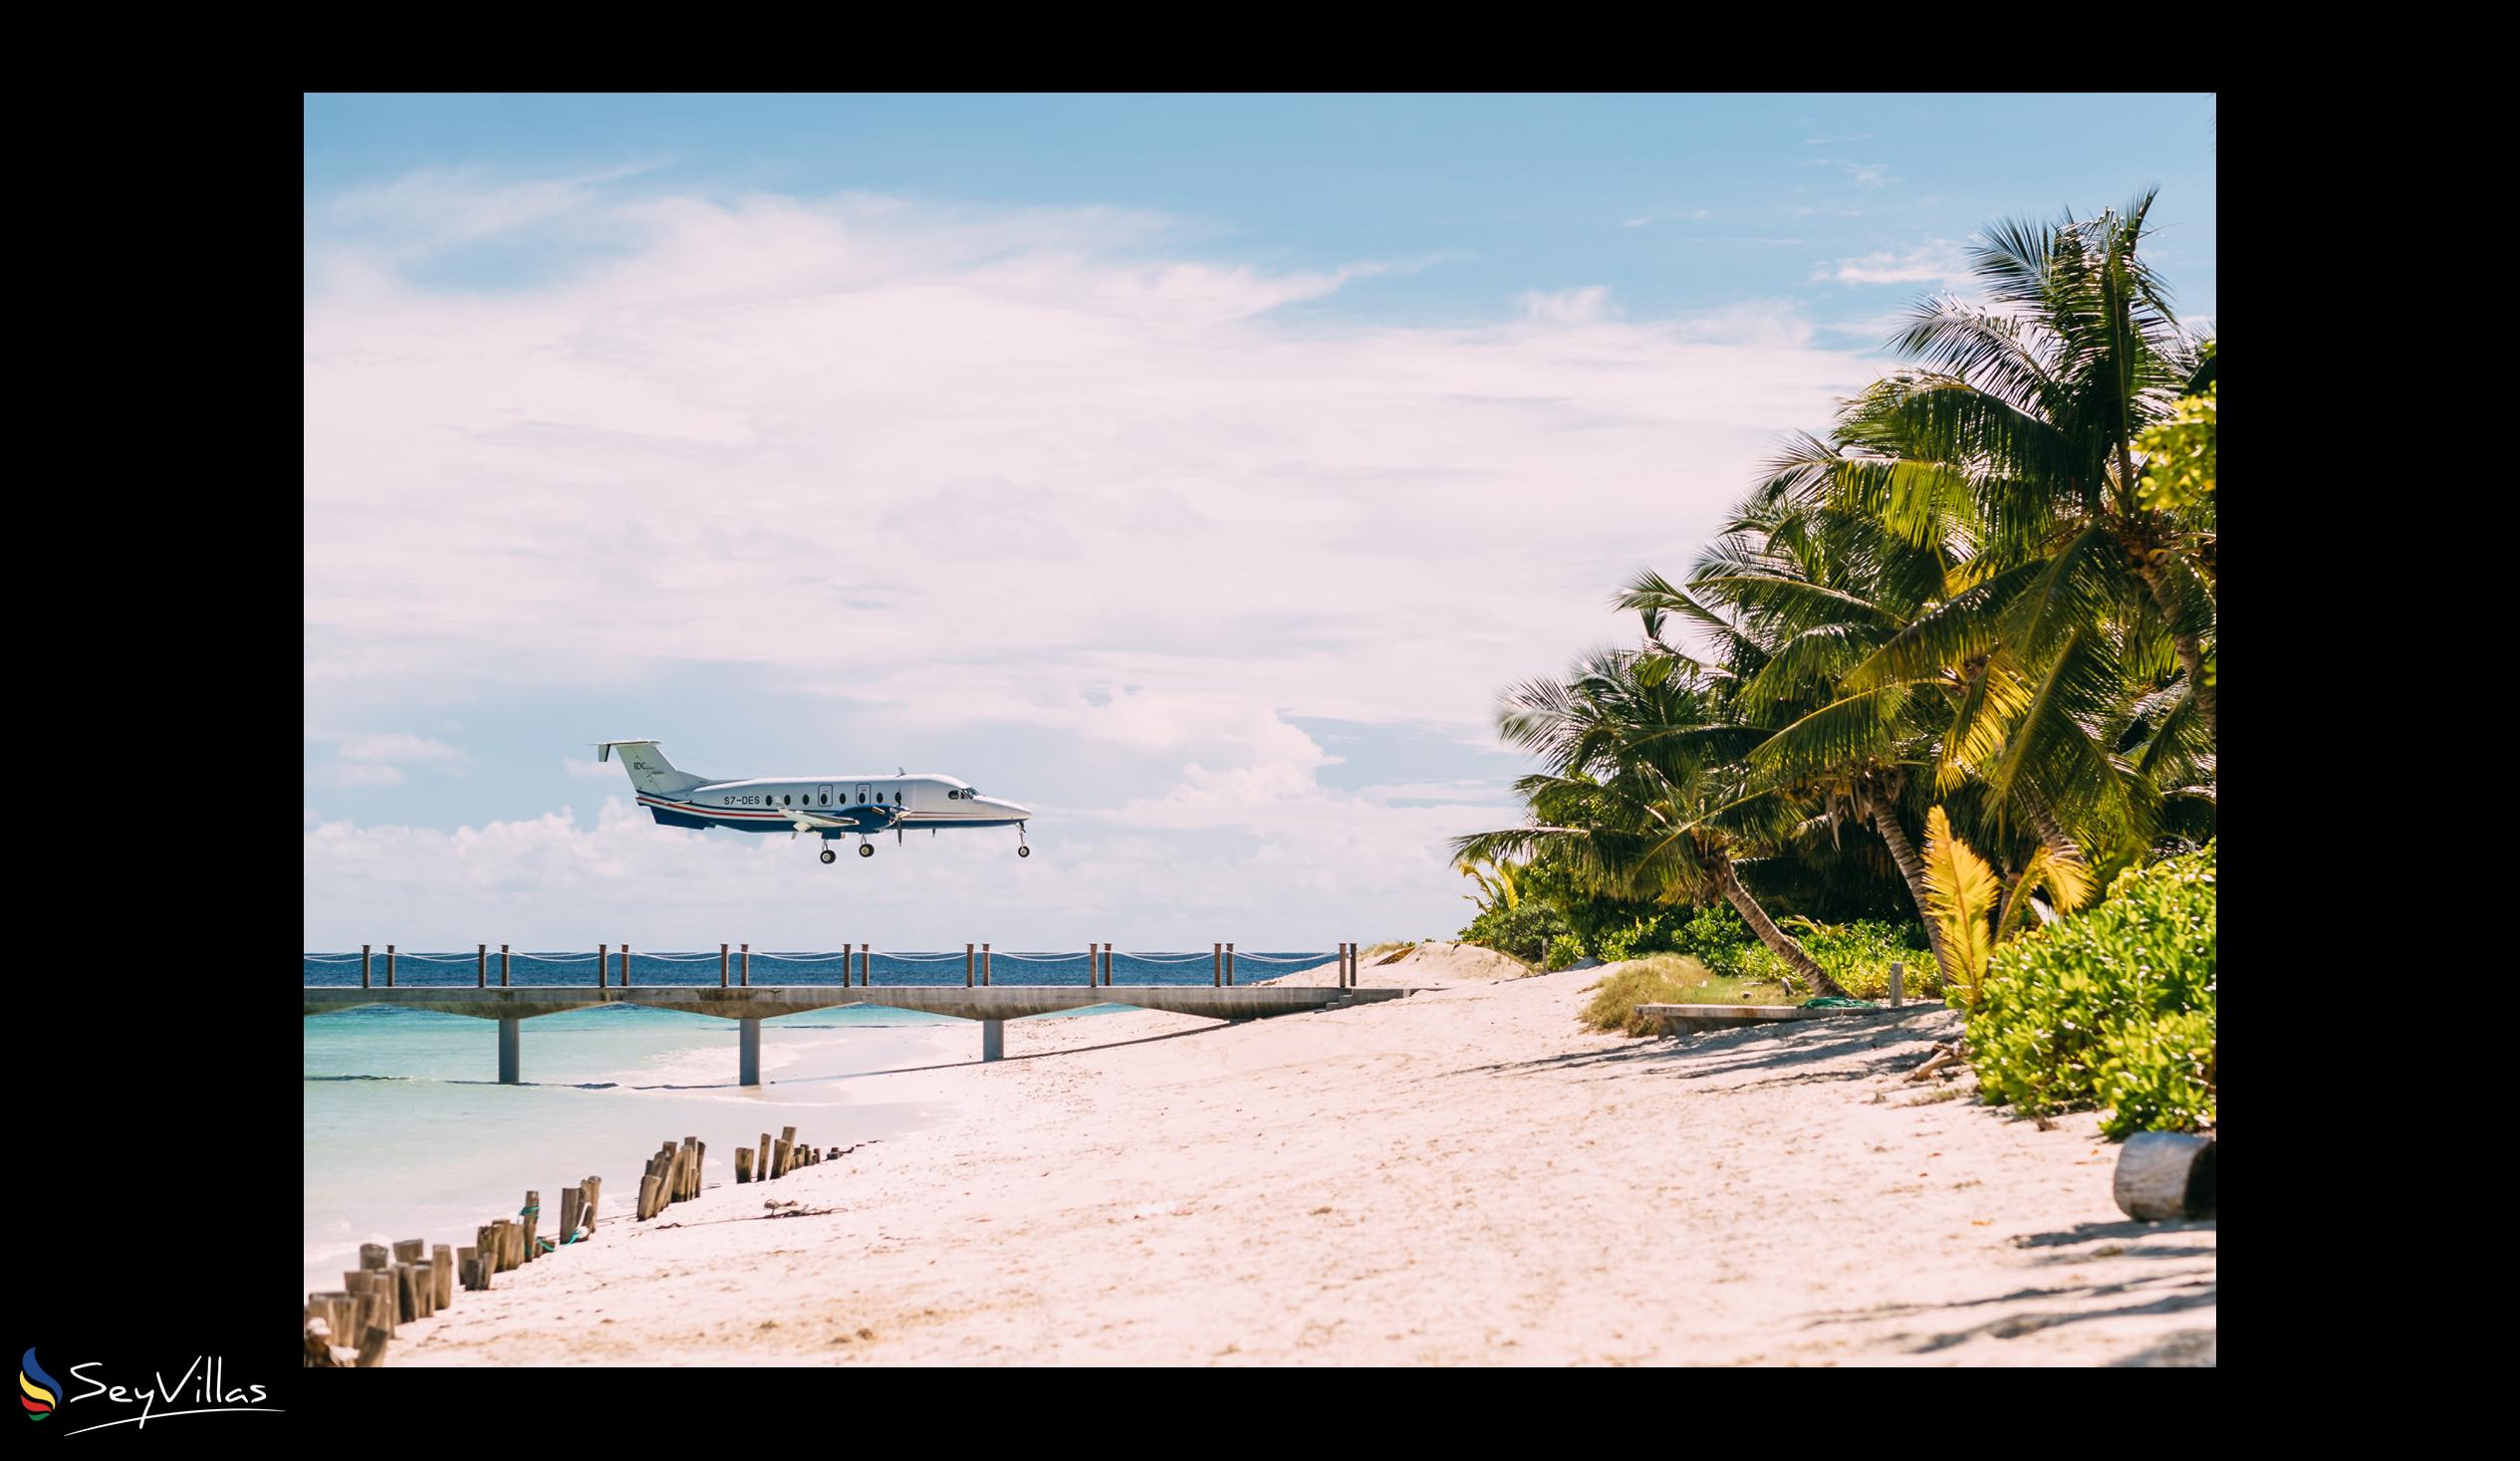 Foto 82: Four Seasons Resort Desroches Island - Location - Desroches Island (Seychelles)